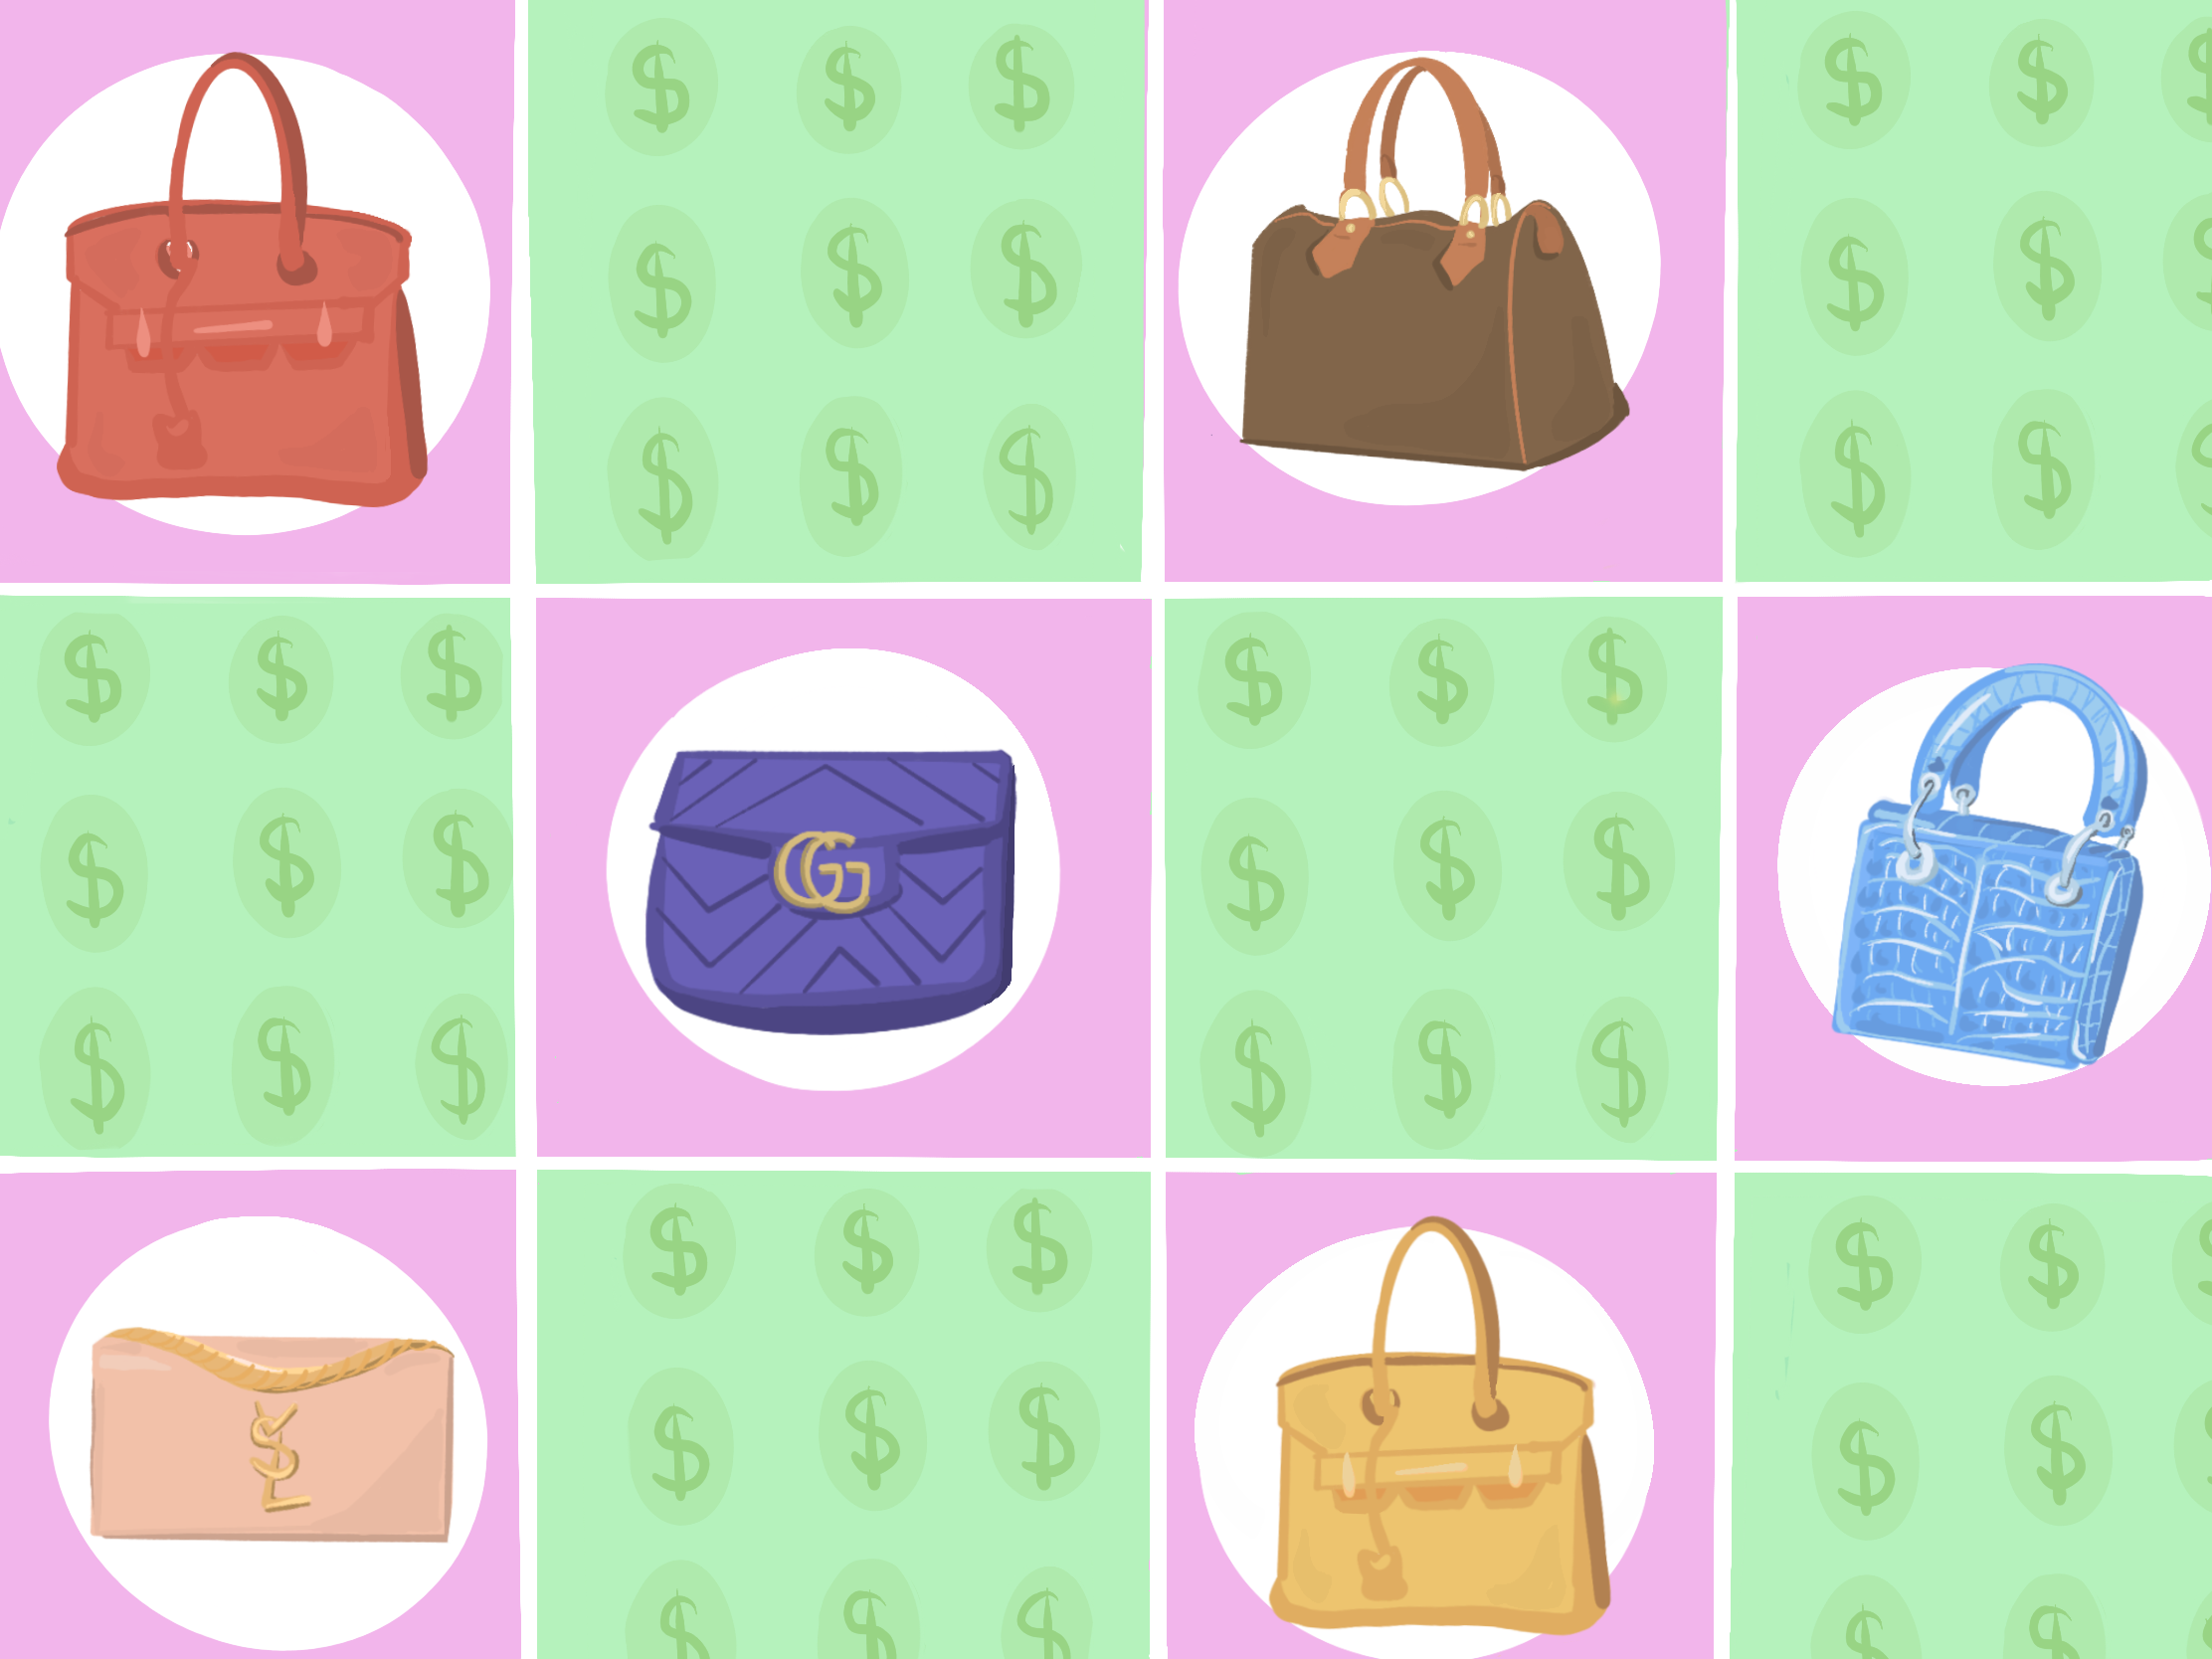 Gucci Handbags PNG Images, Cartoon Handbag, Luxury, Fashion